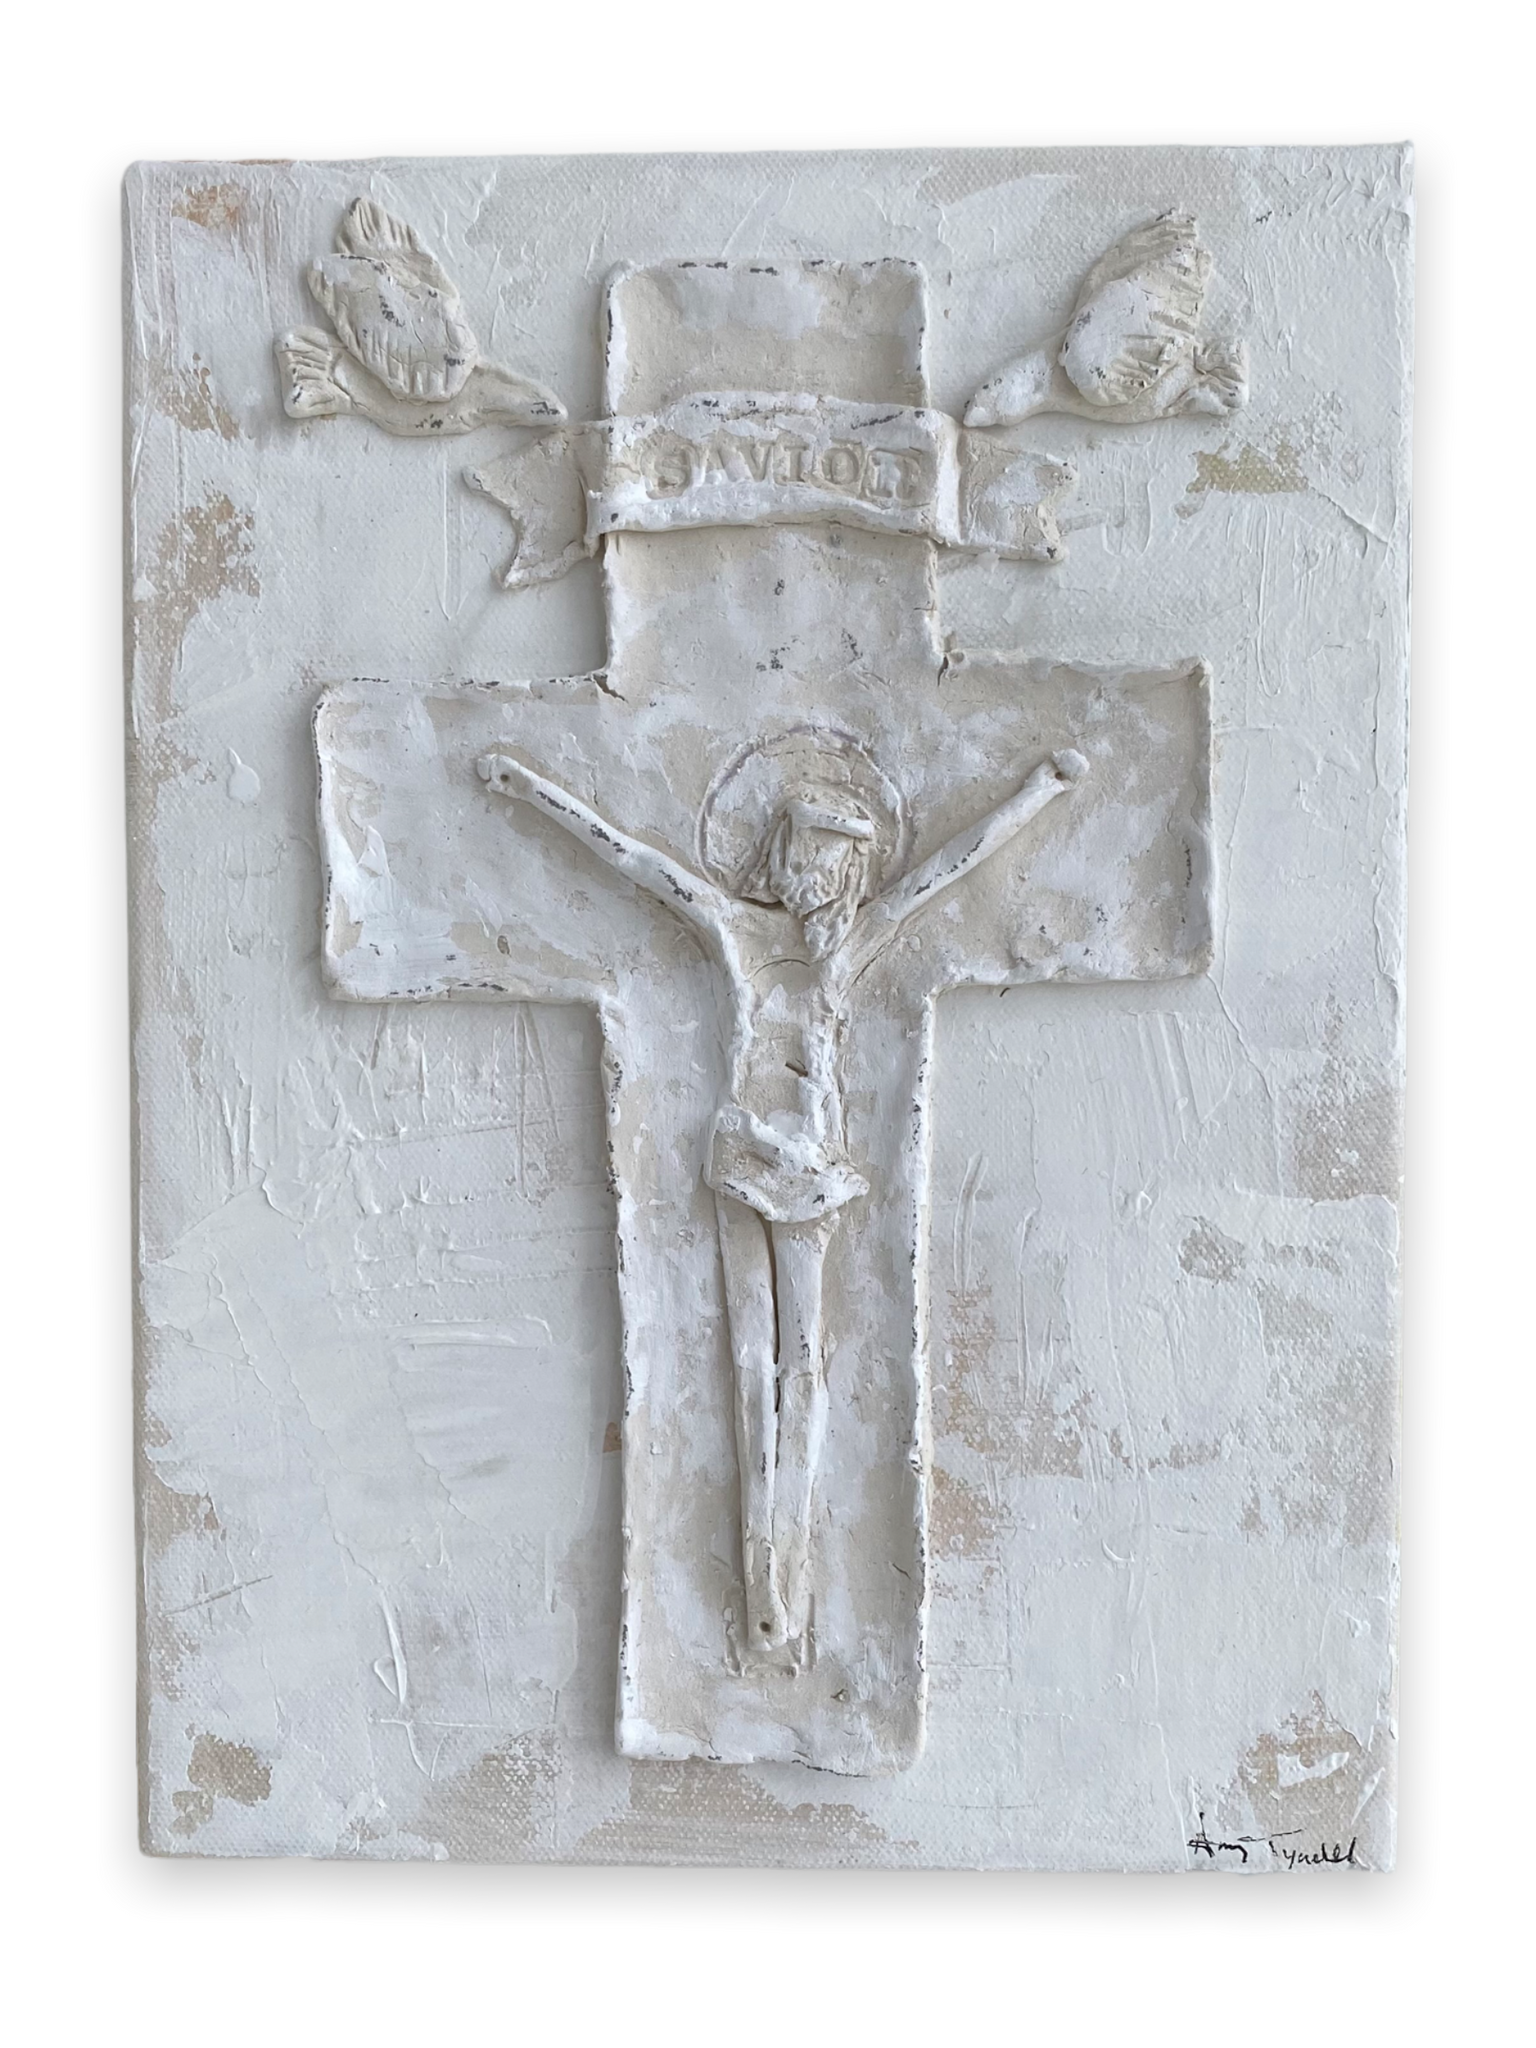 Custom Original Clay Crucifix or Cross